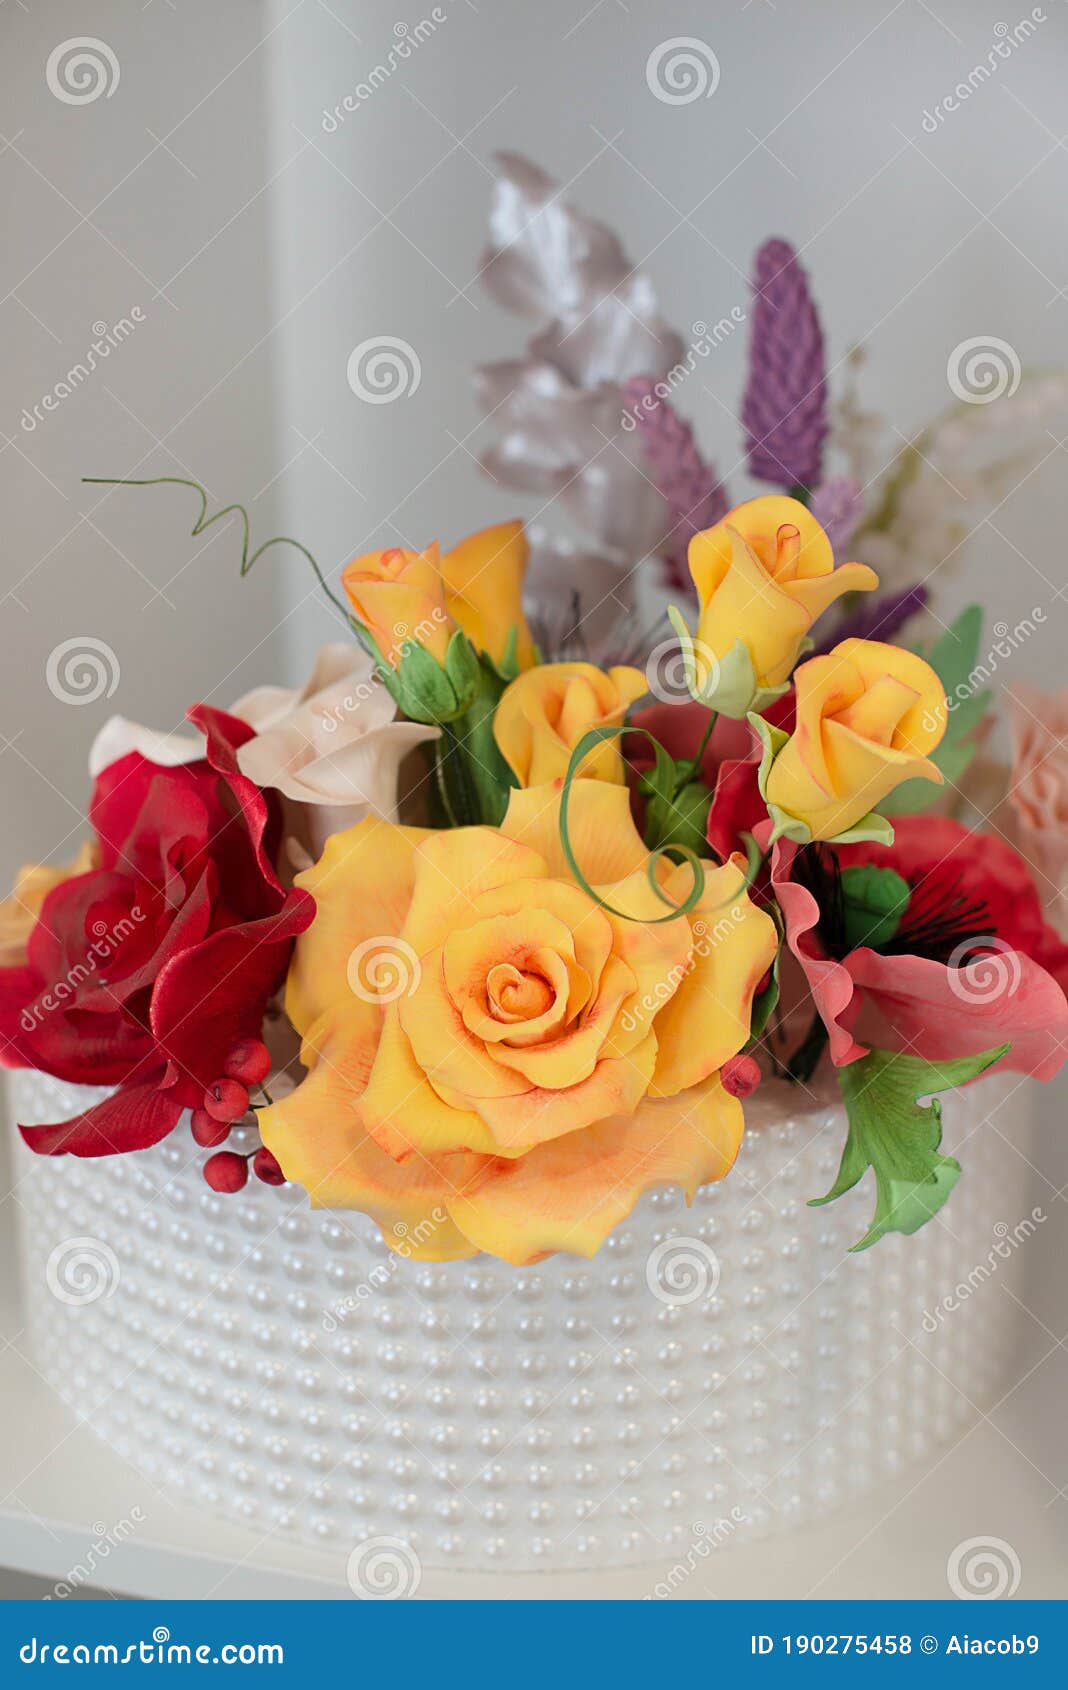 Elegant Floral Decoration for a Wedding Cake, Covered in Royal ...